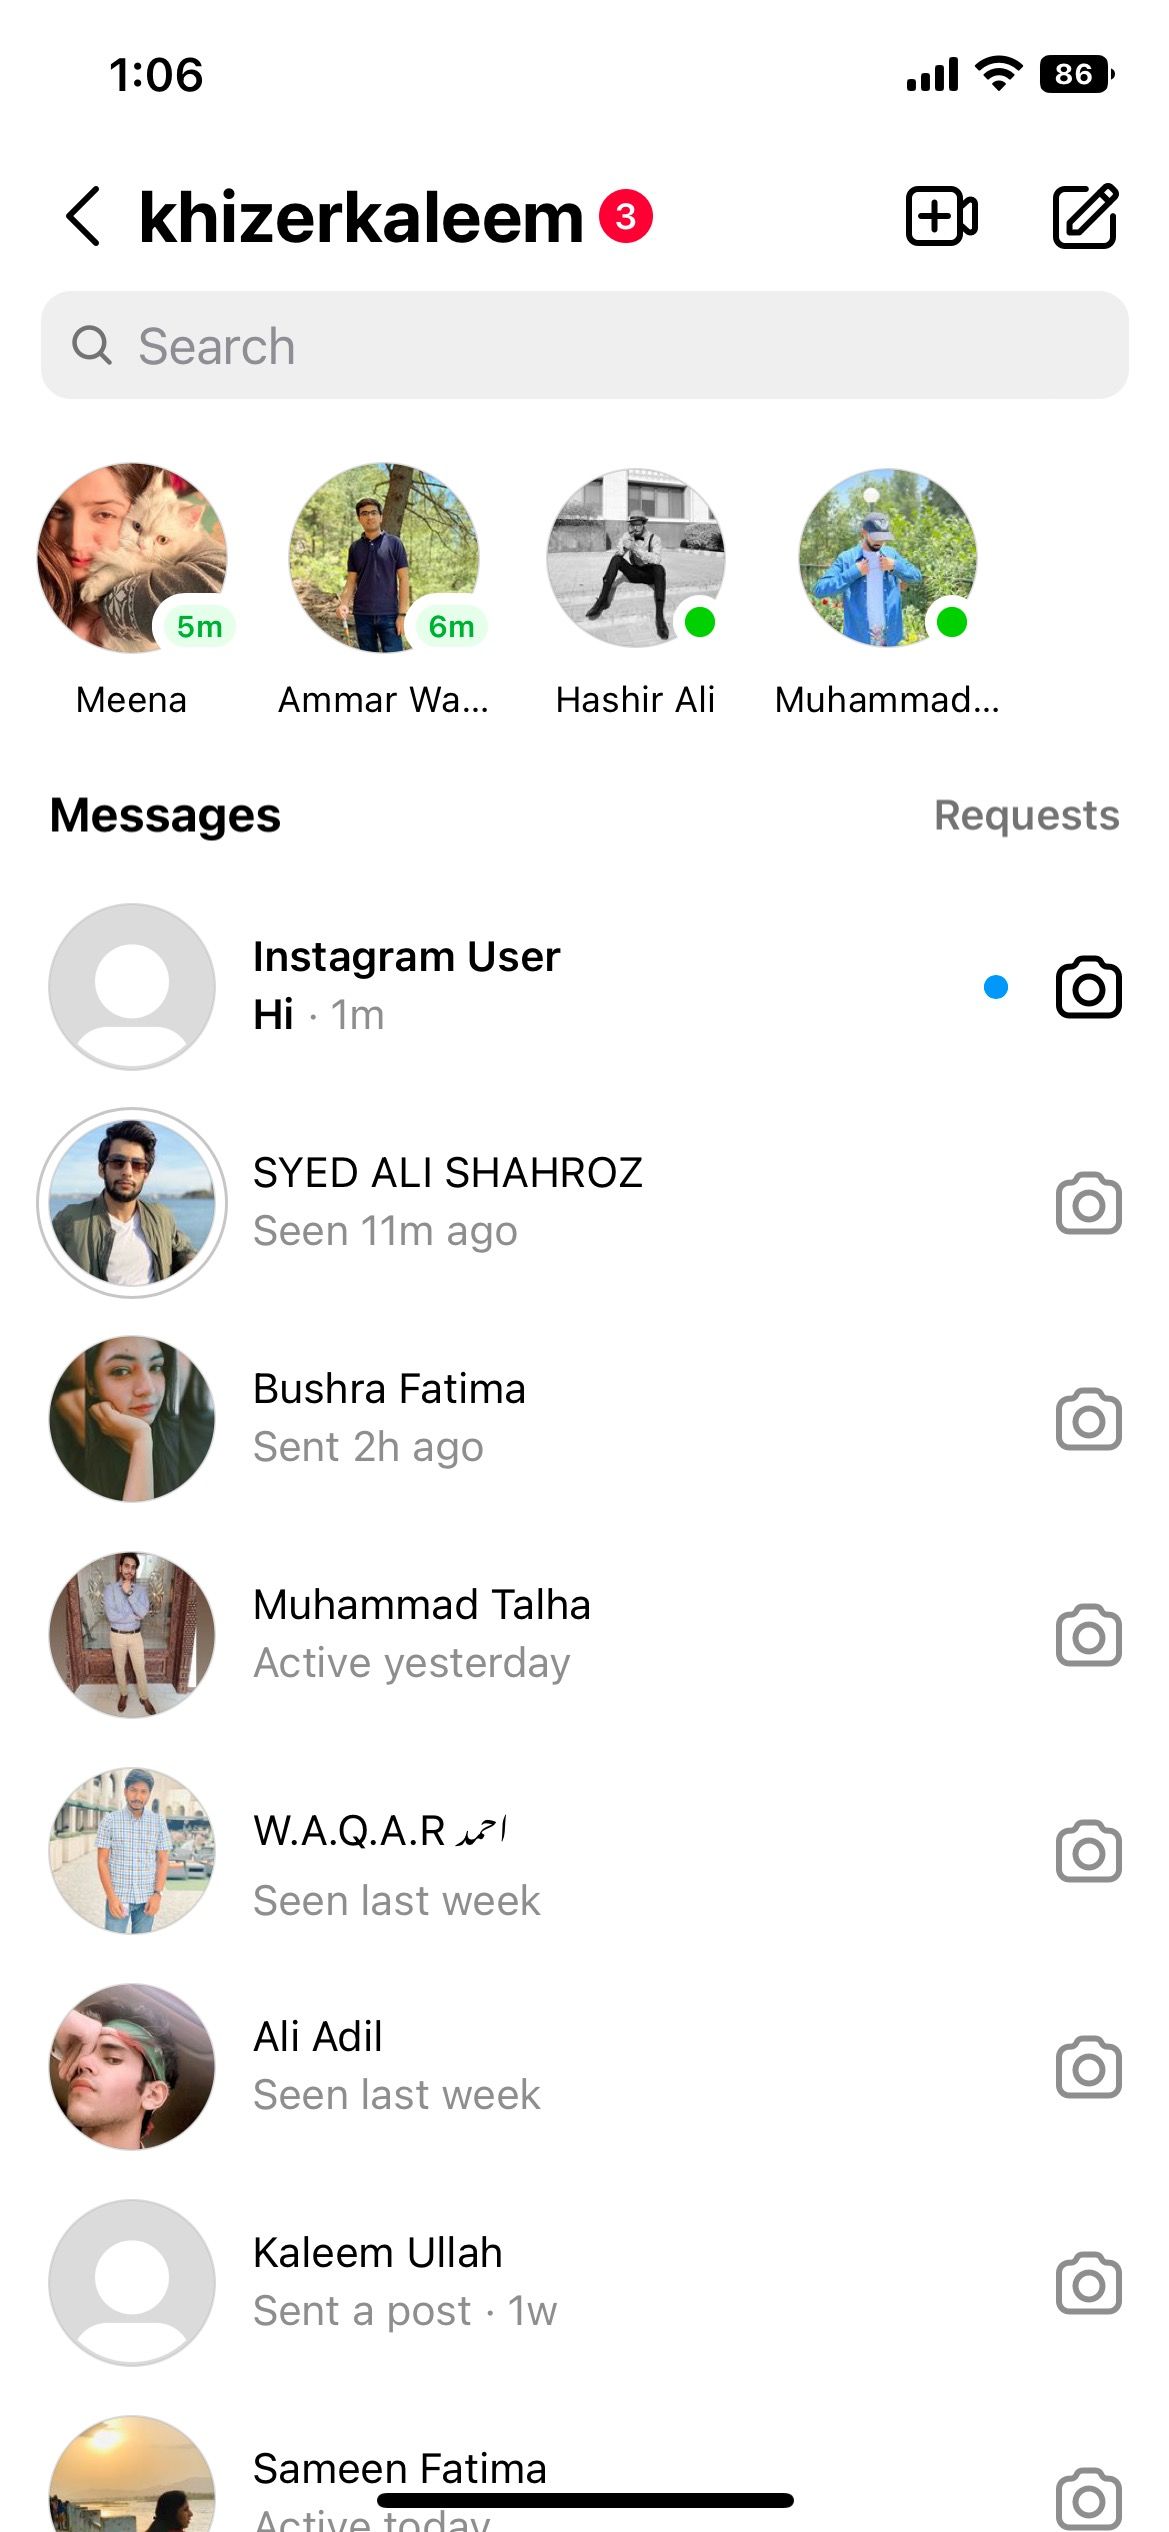 User name showing Instagram User